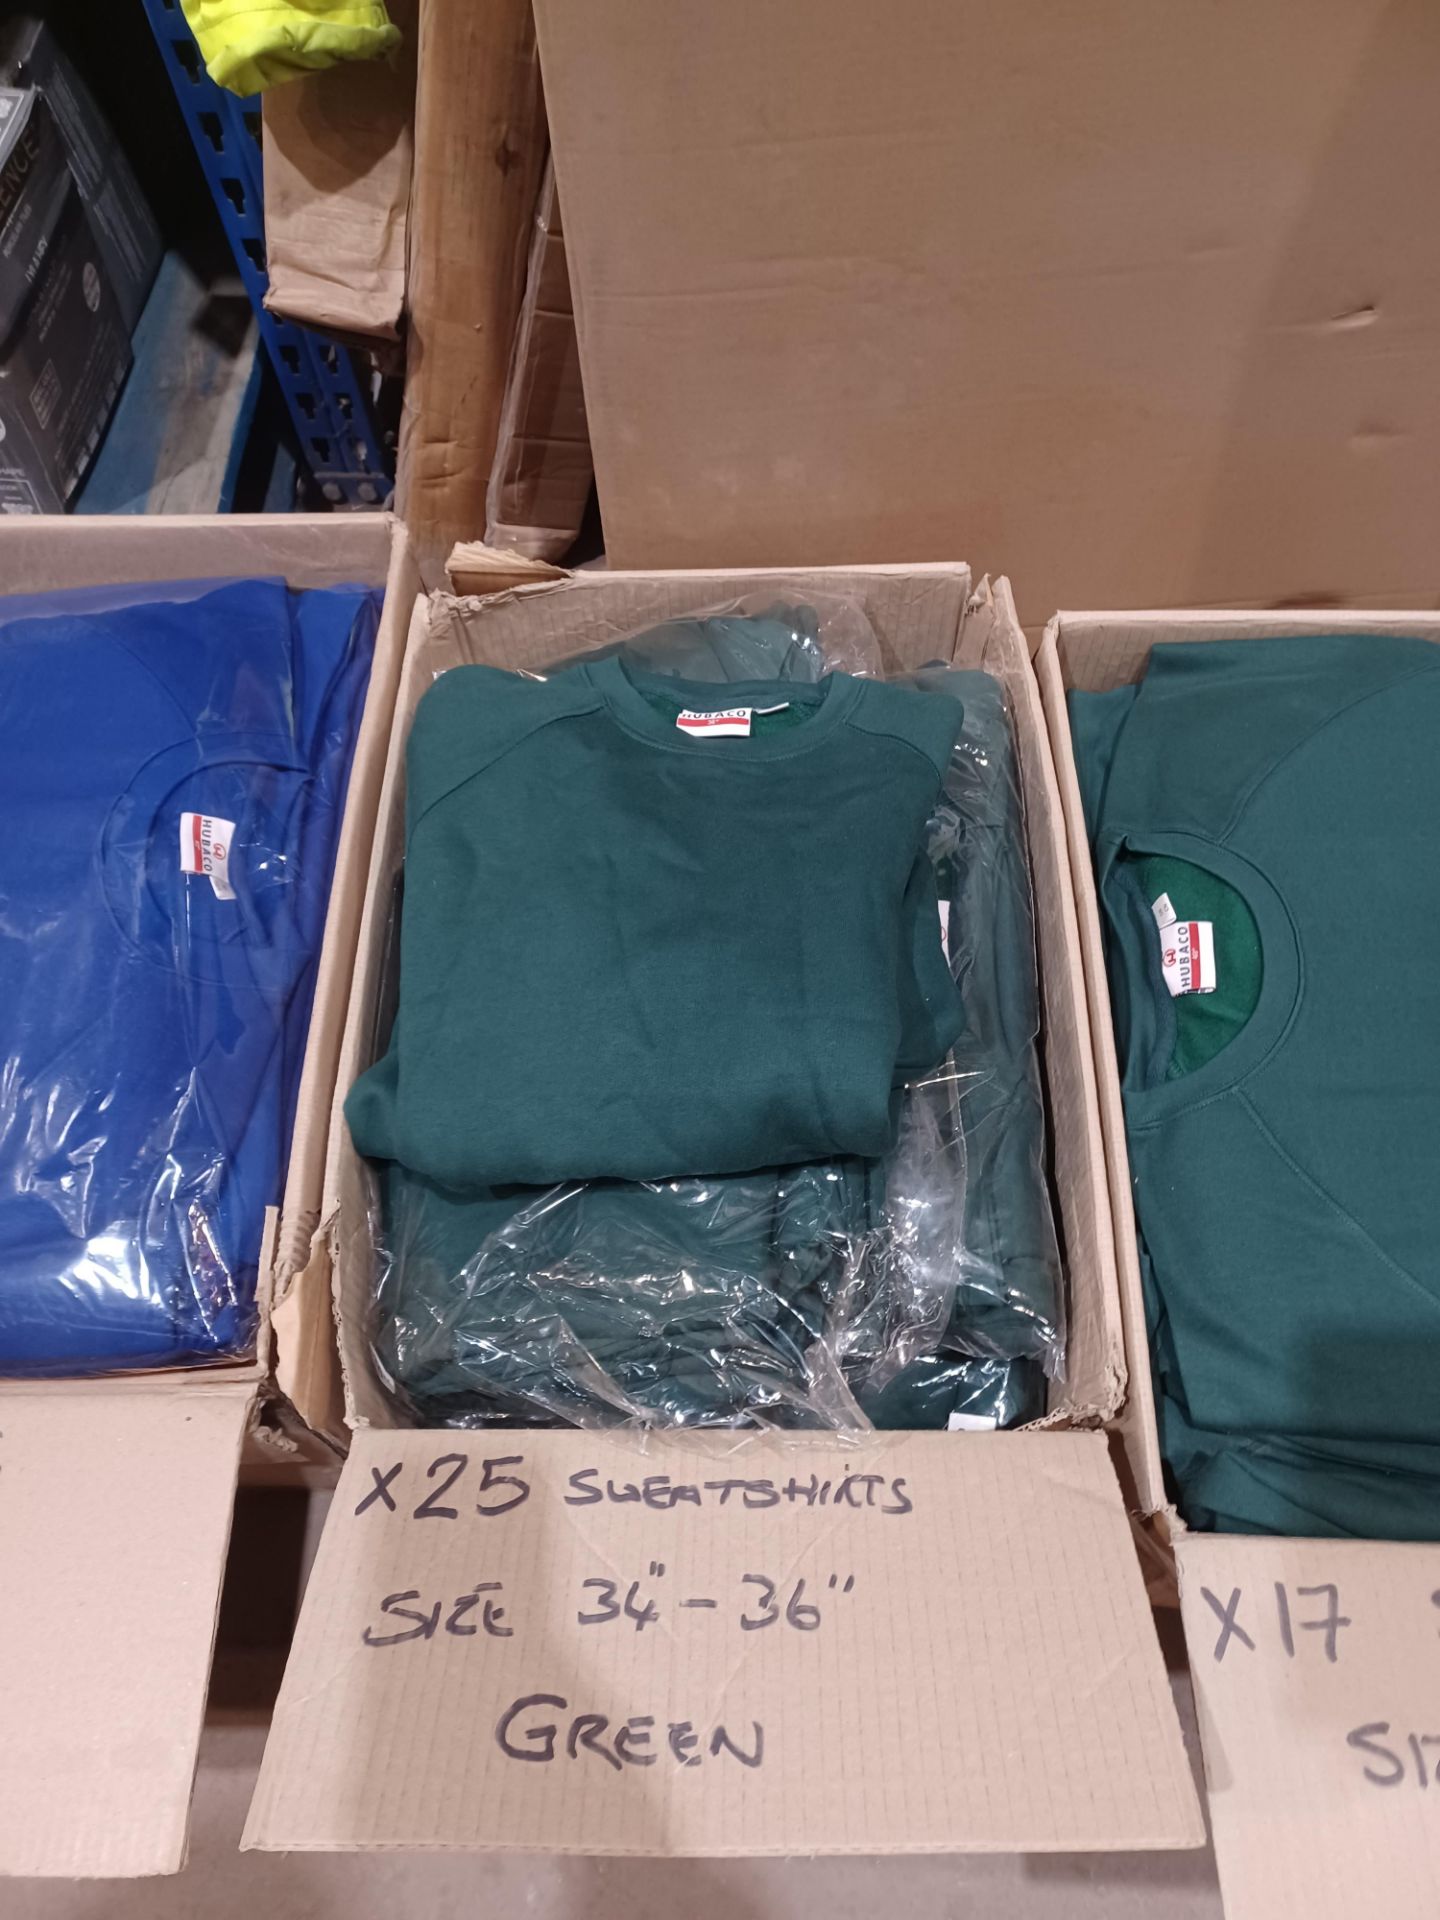 25 x Premium Soft Fleeced Sweatshirts in Size 34-36" - R14. RRP £14.51 each